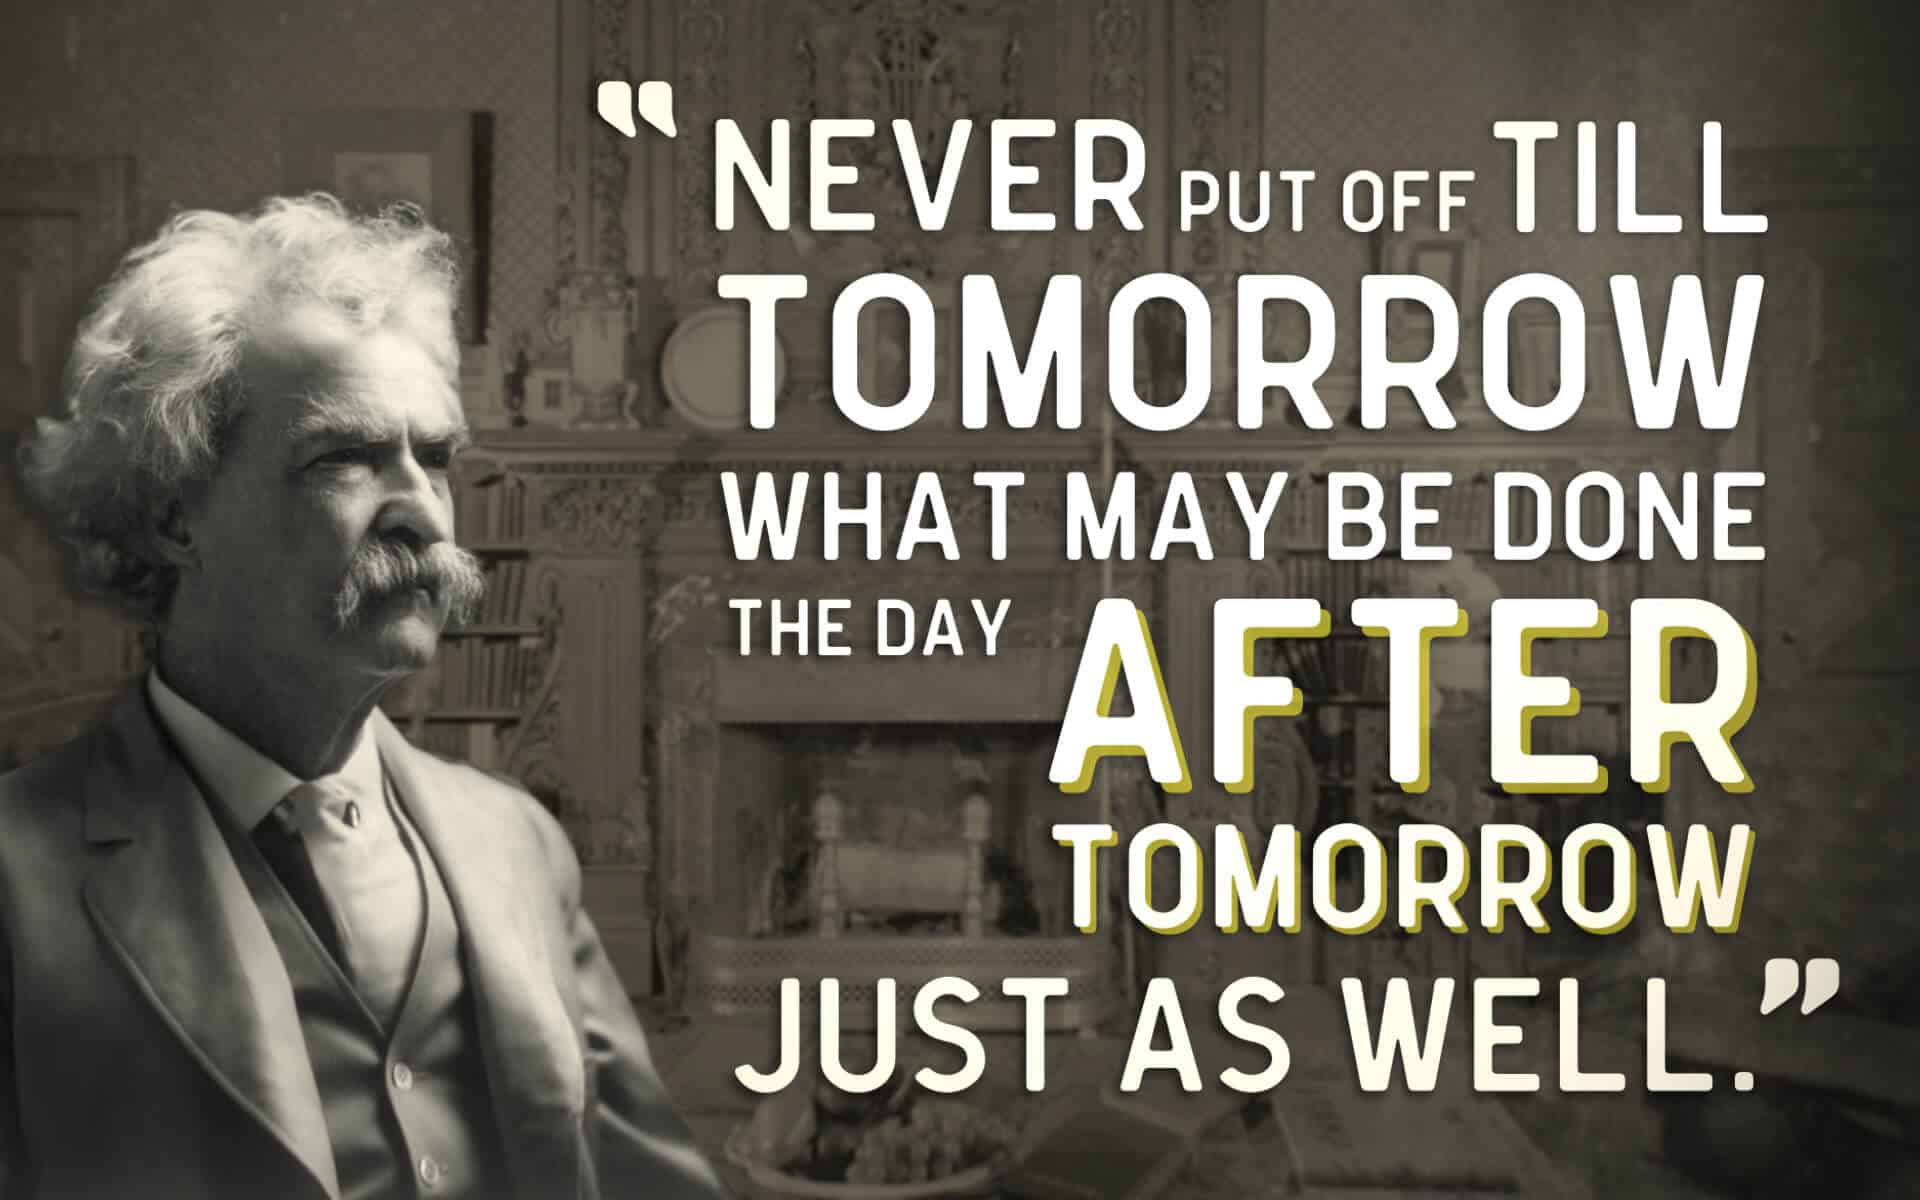 Mark Twain Quote